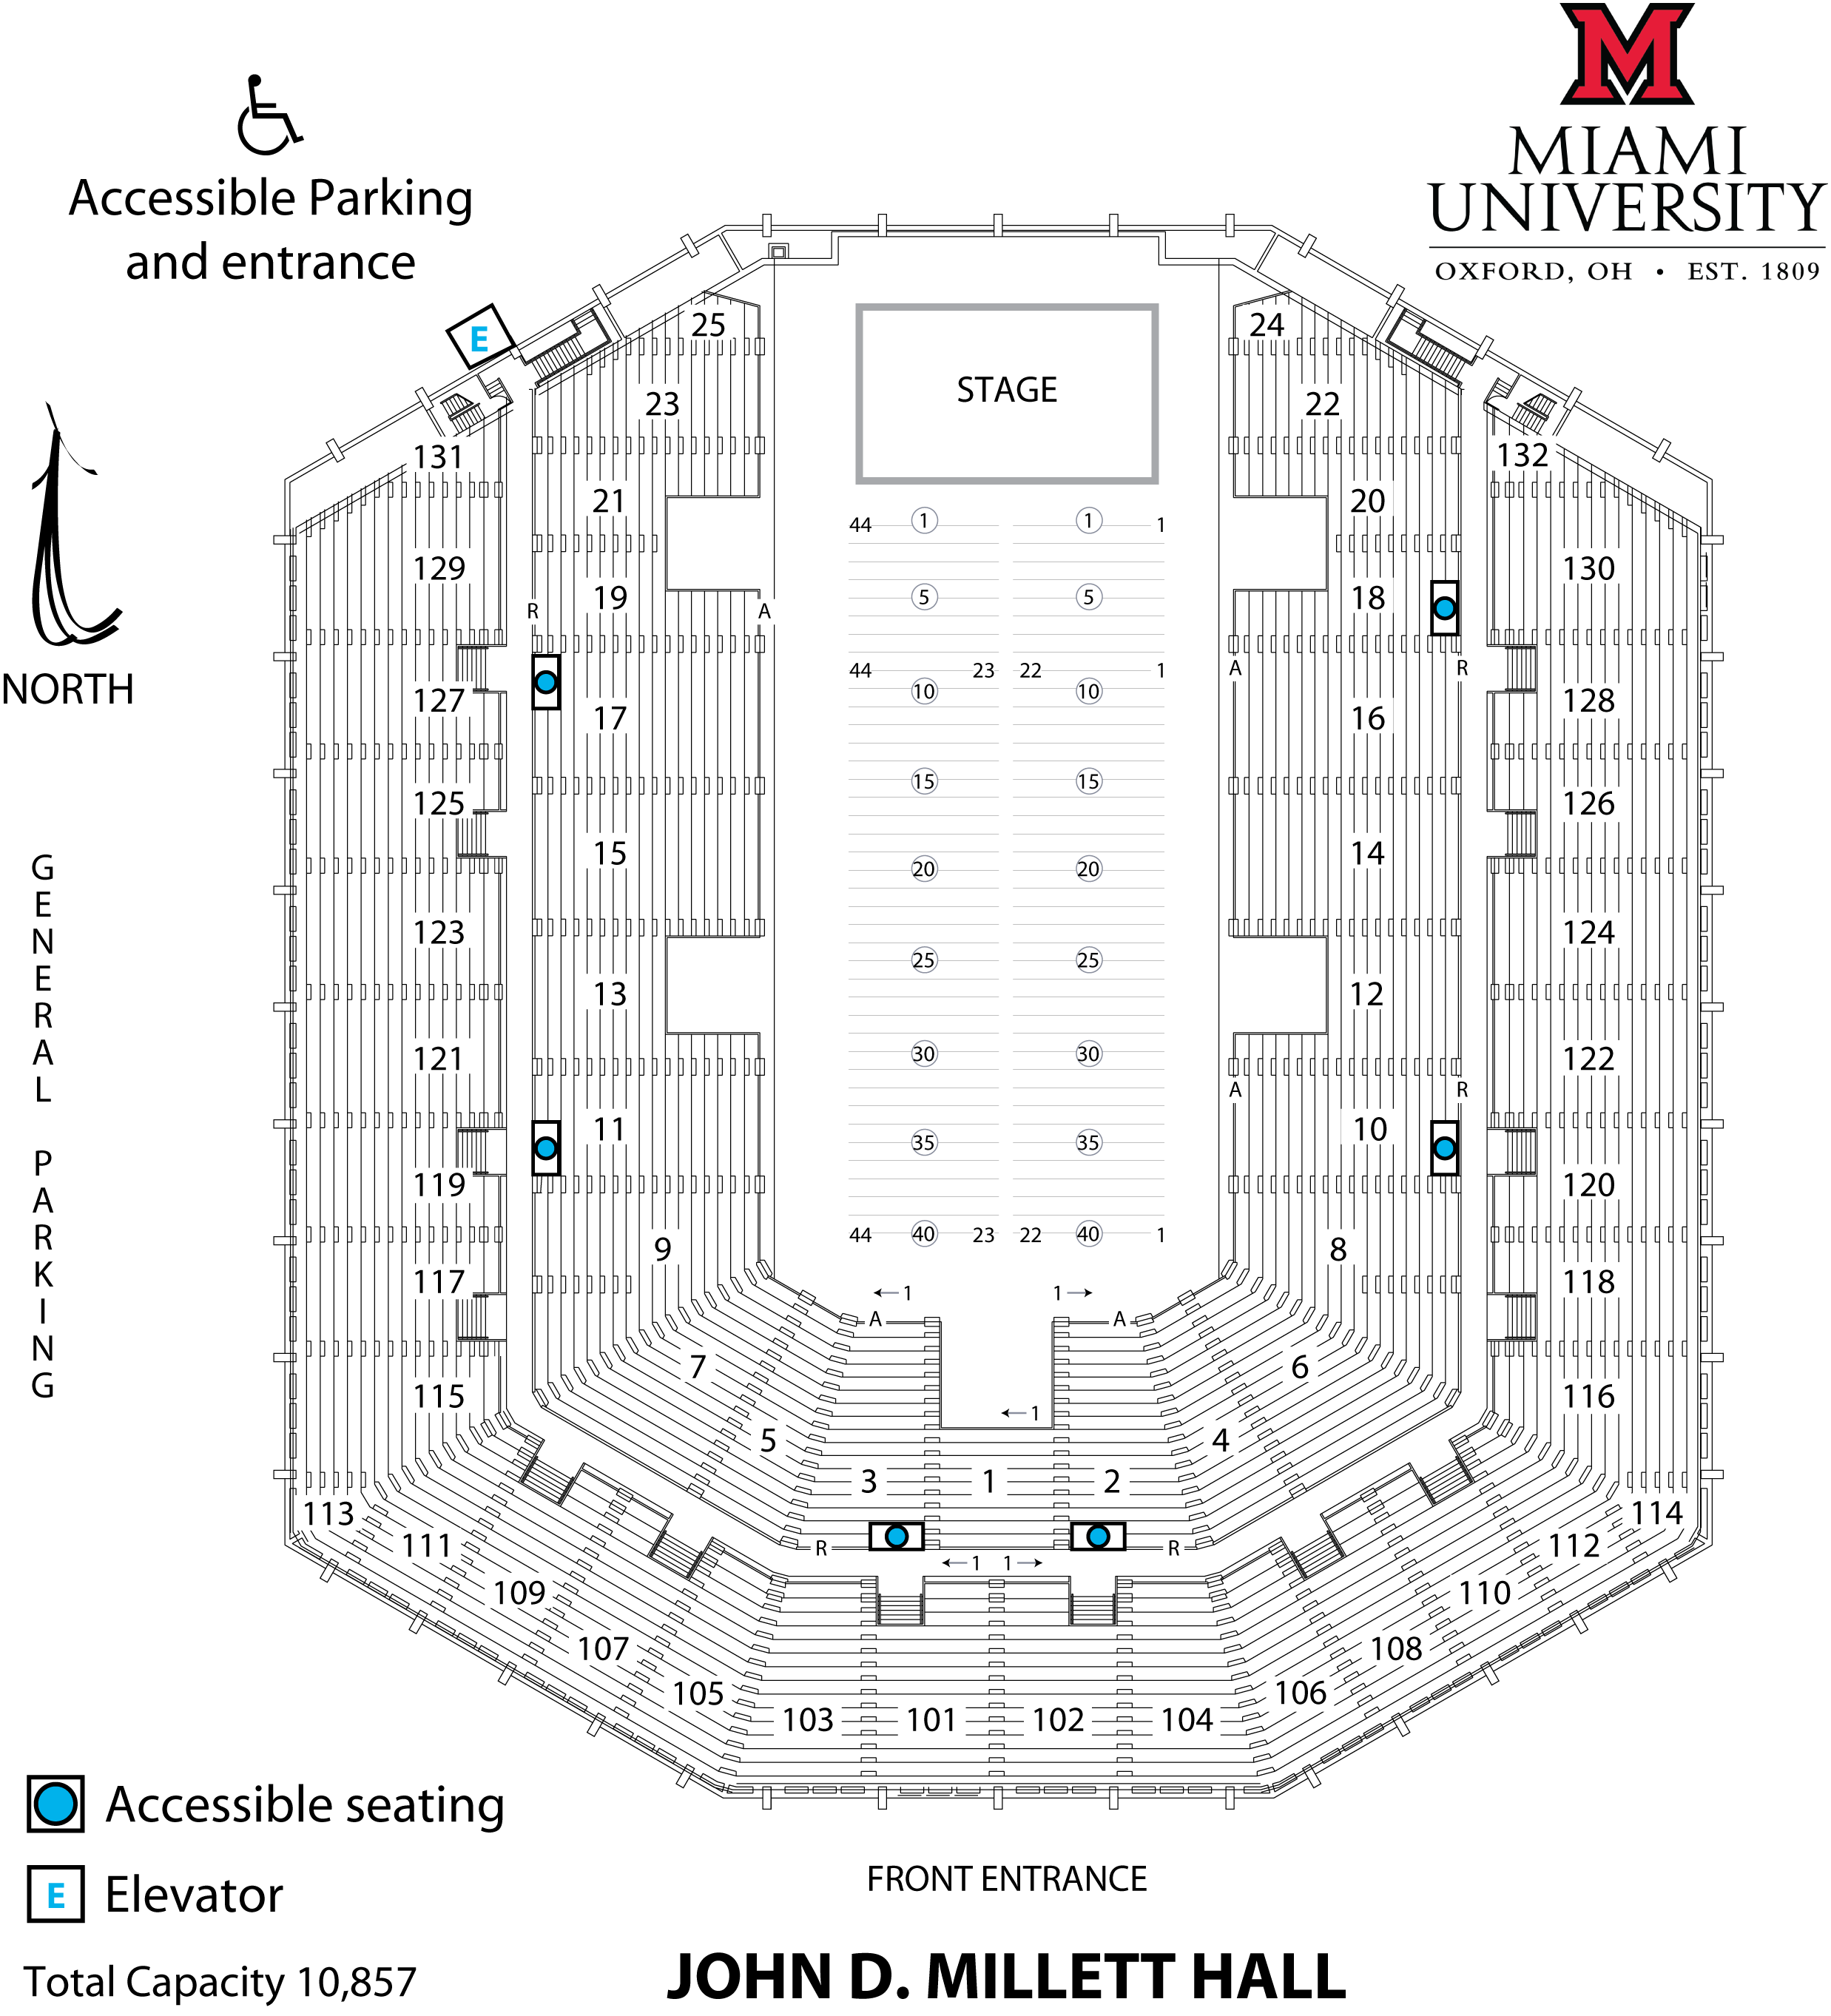 Miami Dade County Auditorium Seating Chart